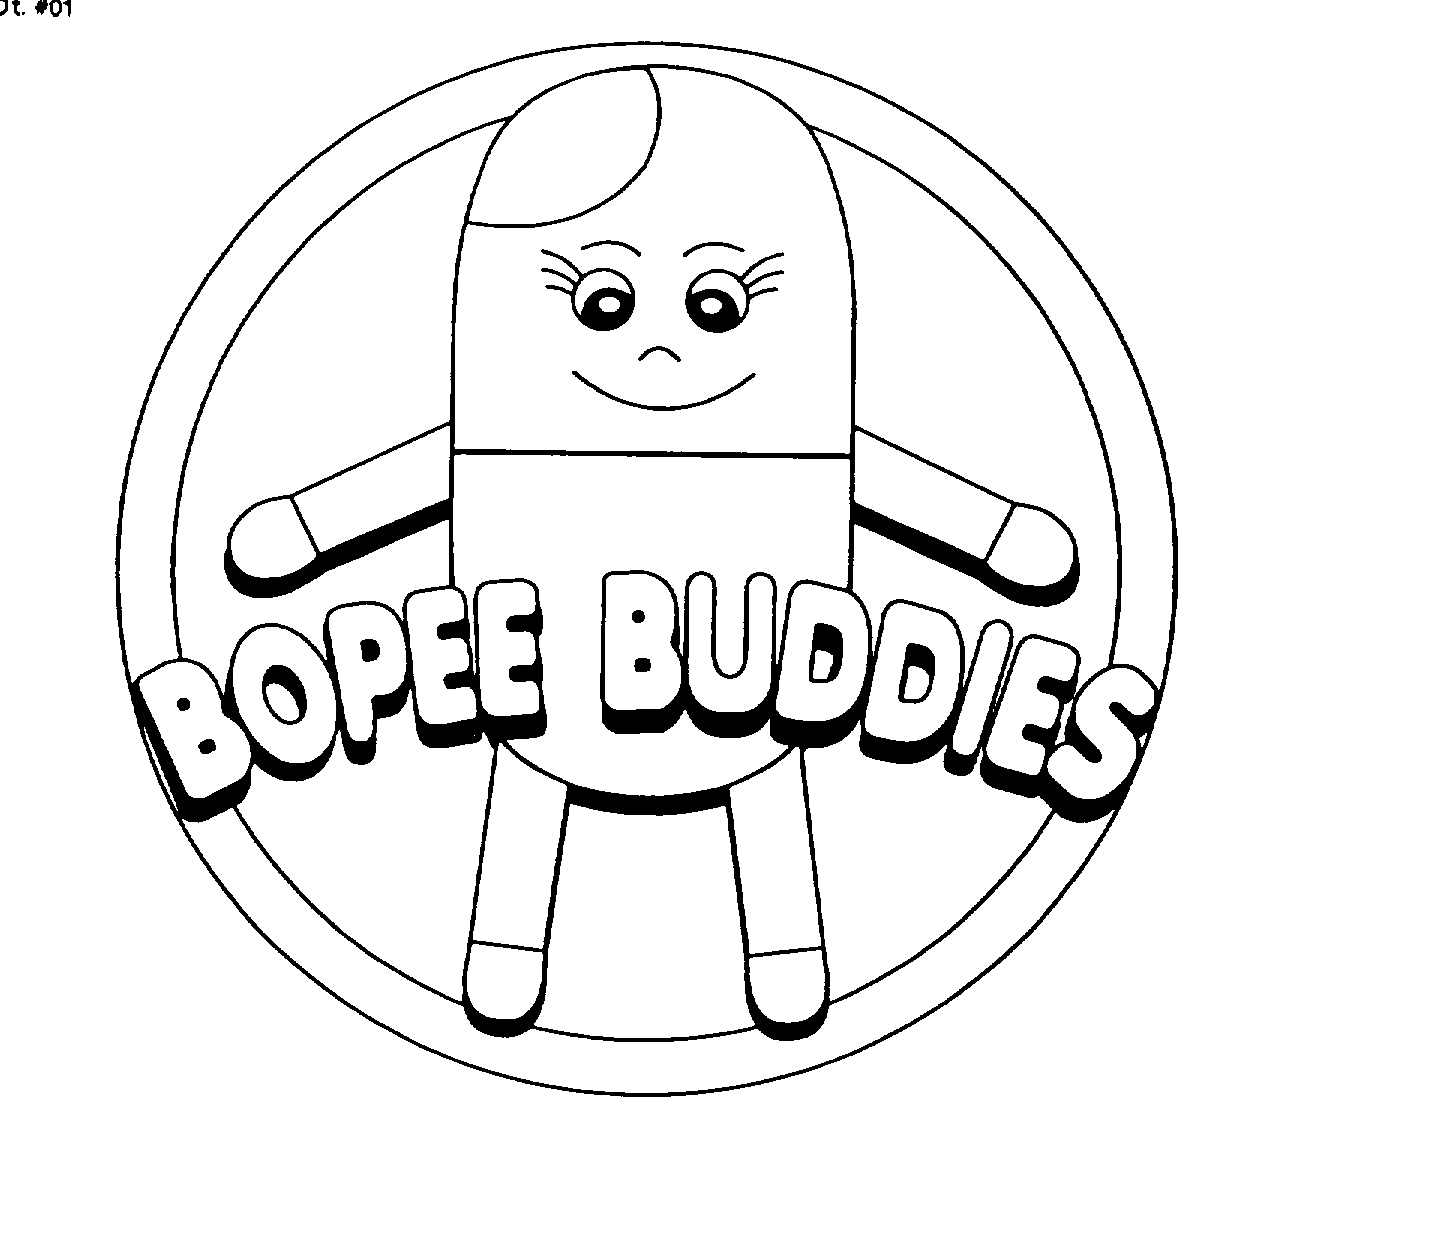  BOPEE BUDDIES